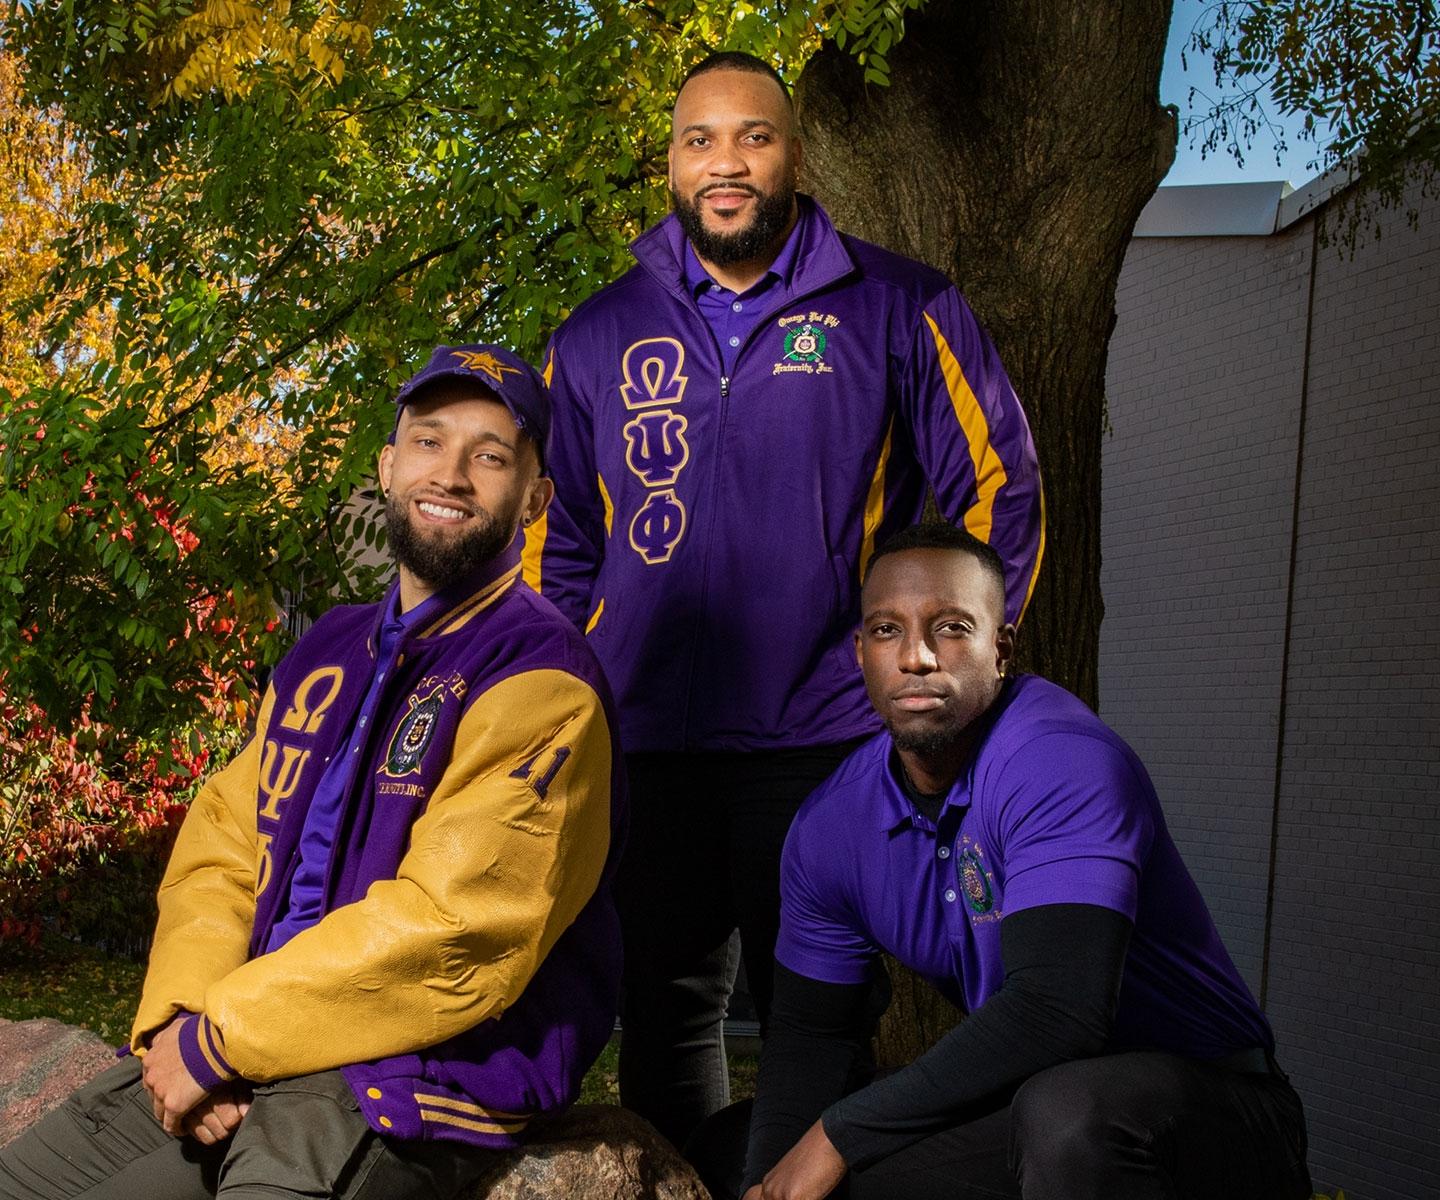 Three members of Lambda Mu Mu together outdoors in fraternity clothing